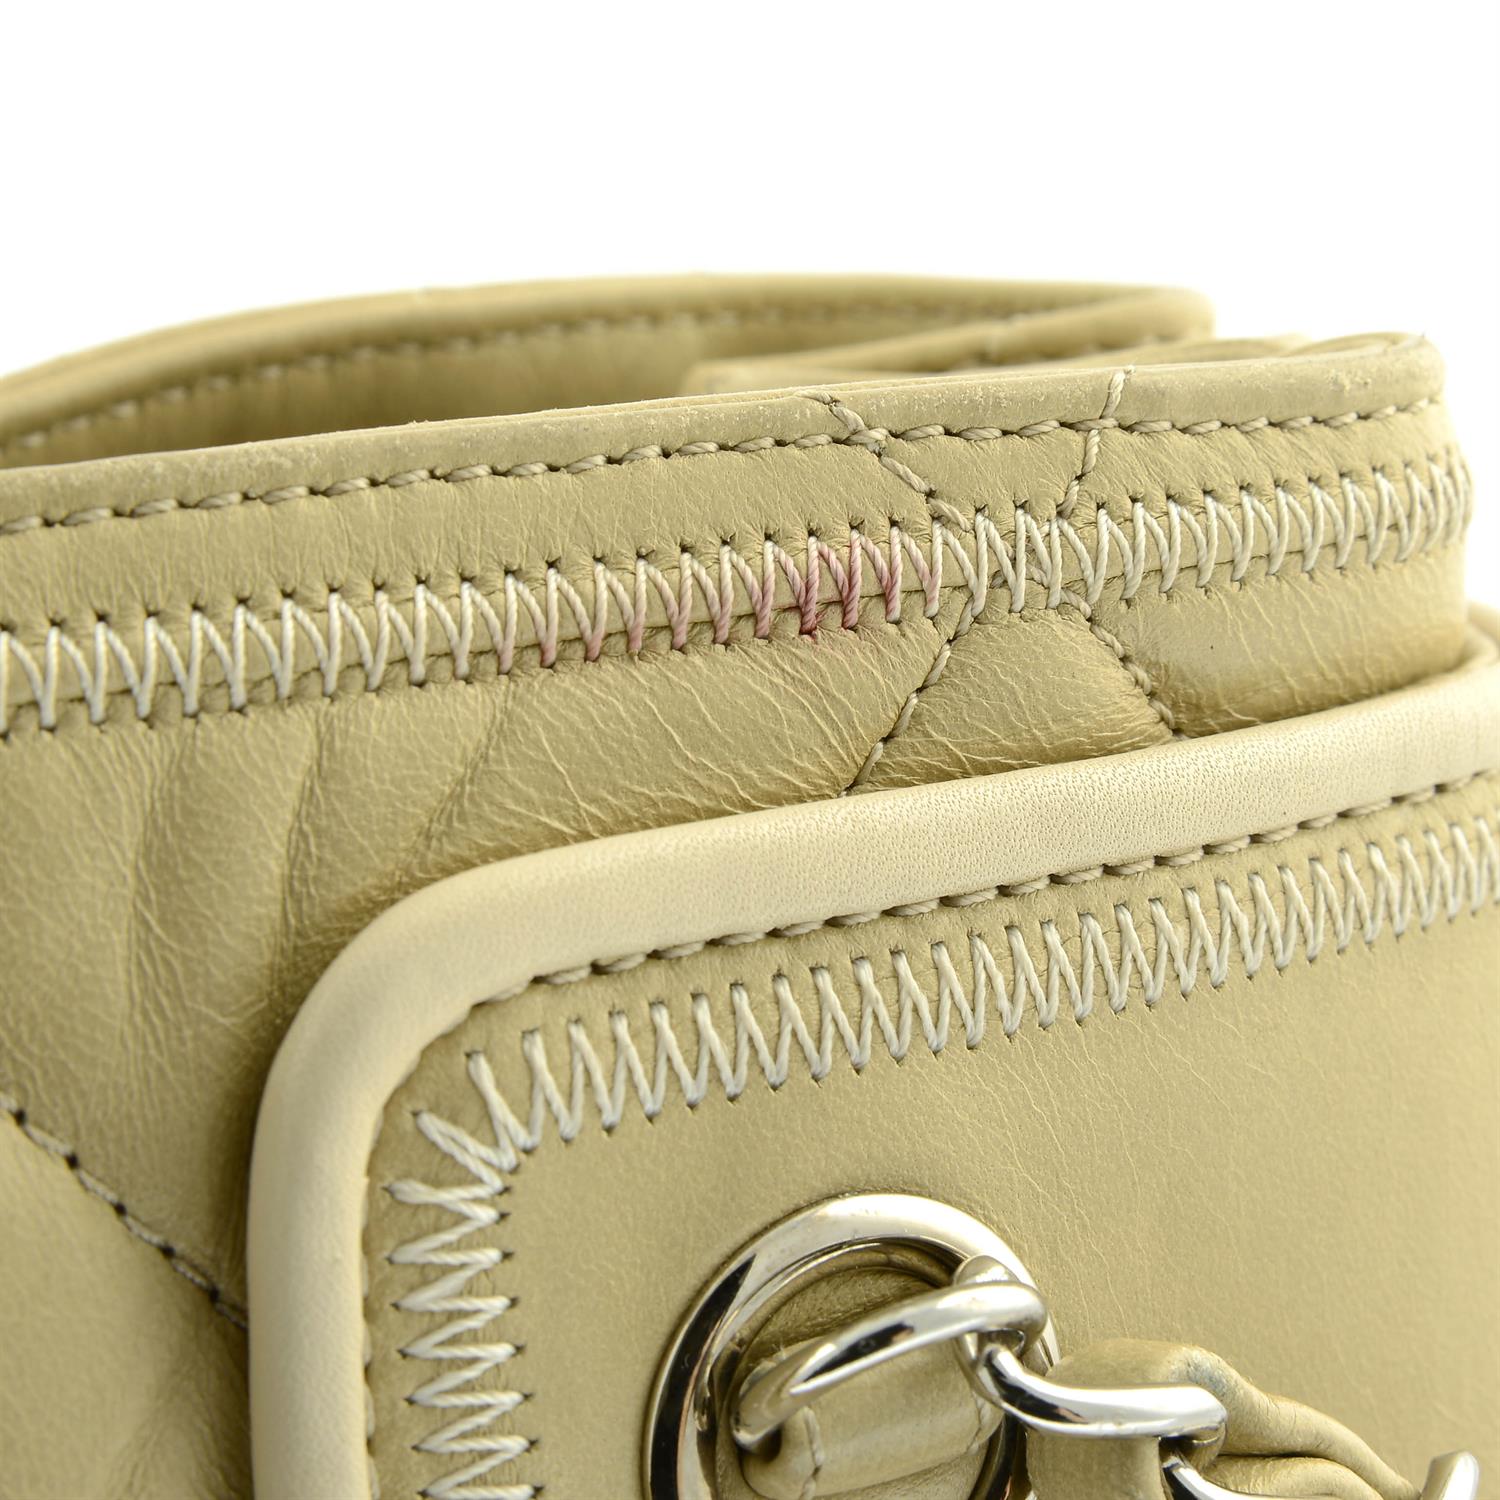 CHANEL - A beige cream shopper handbag - Image 5 of 5